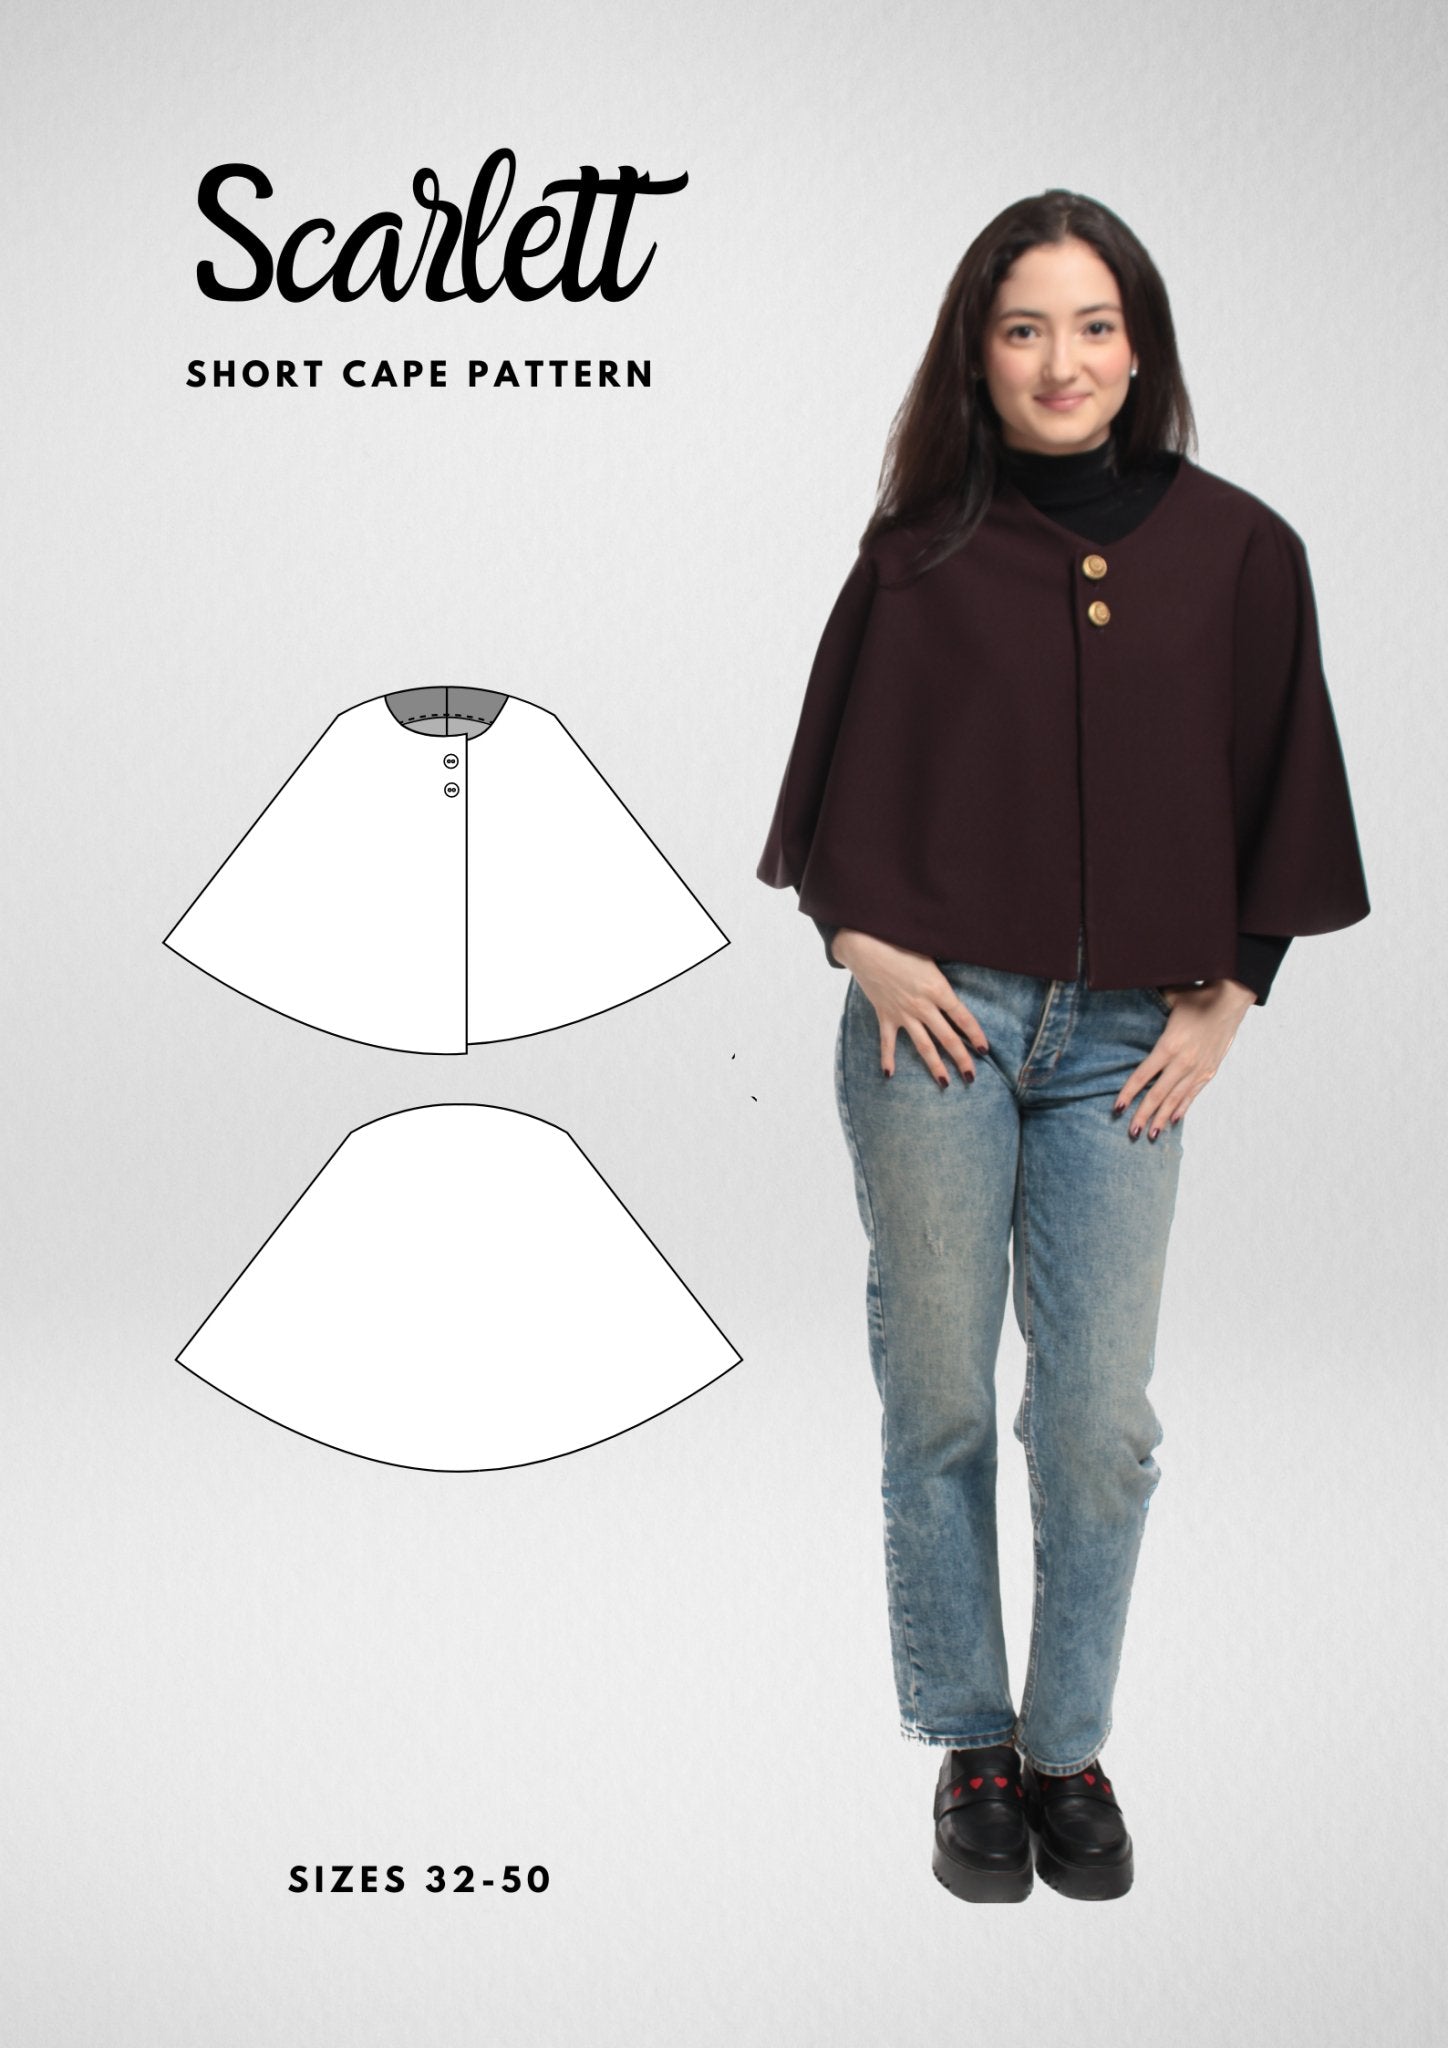 Short Cape Sewing Pattern [Scarlett] - Friedlies